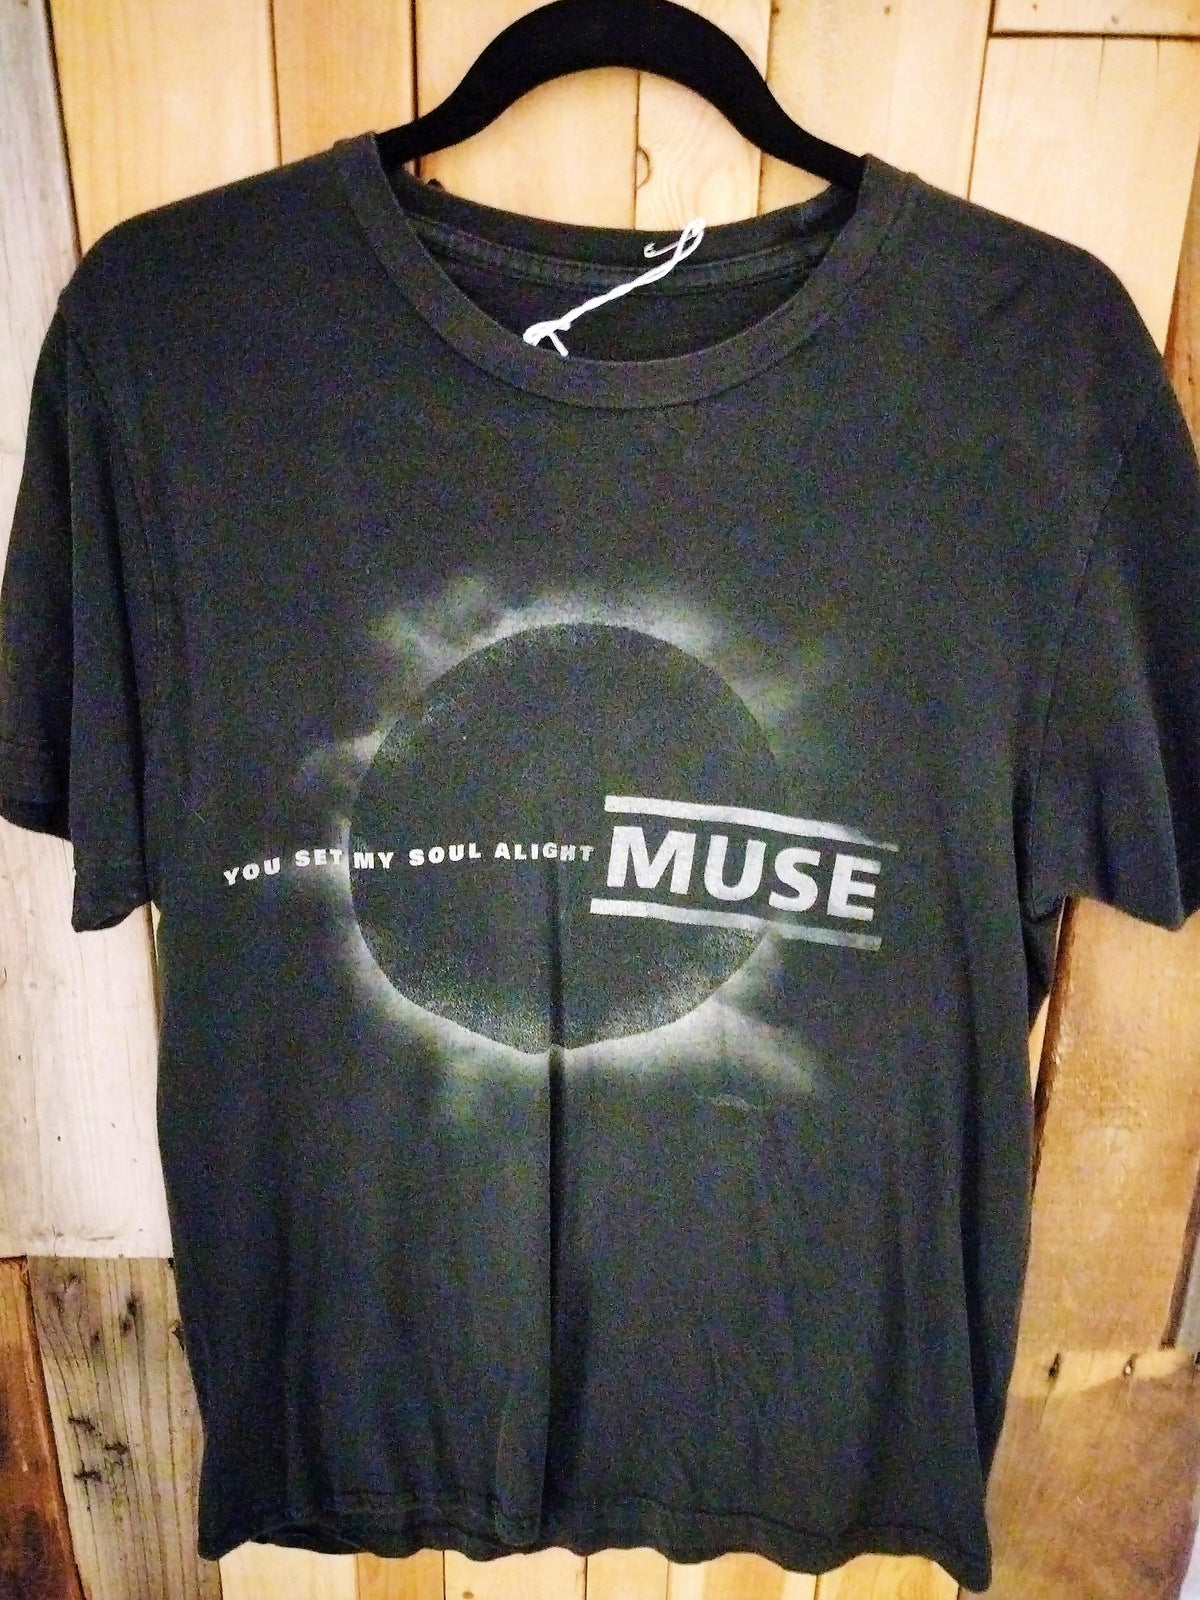 Muse "You Set My Soul Alight" T Shirt Size Size Large